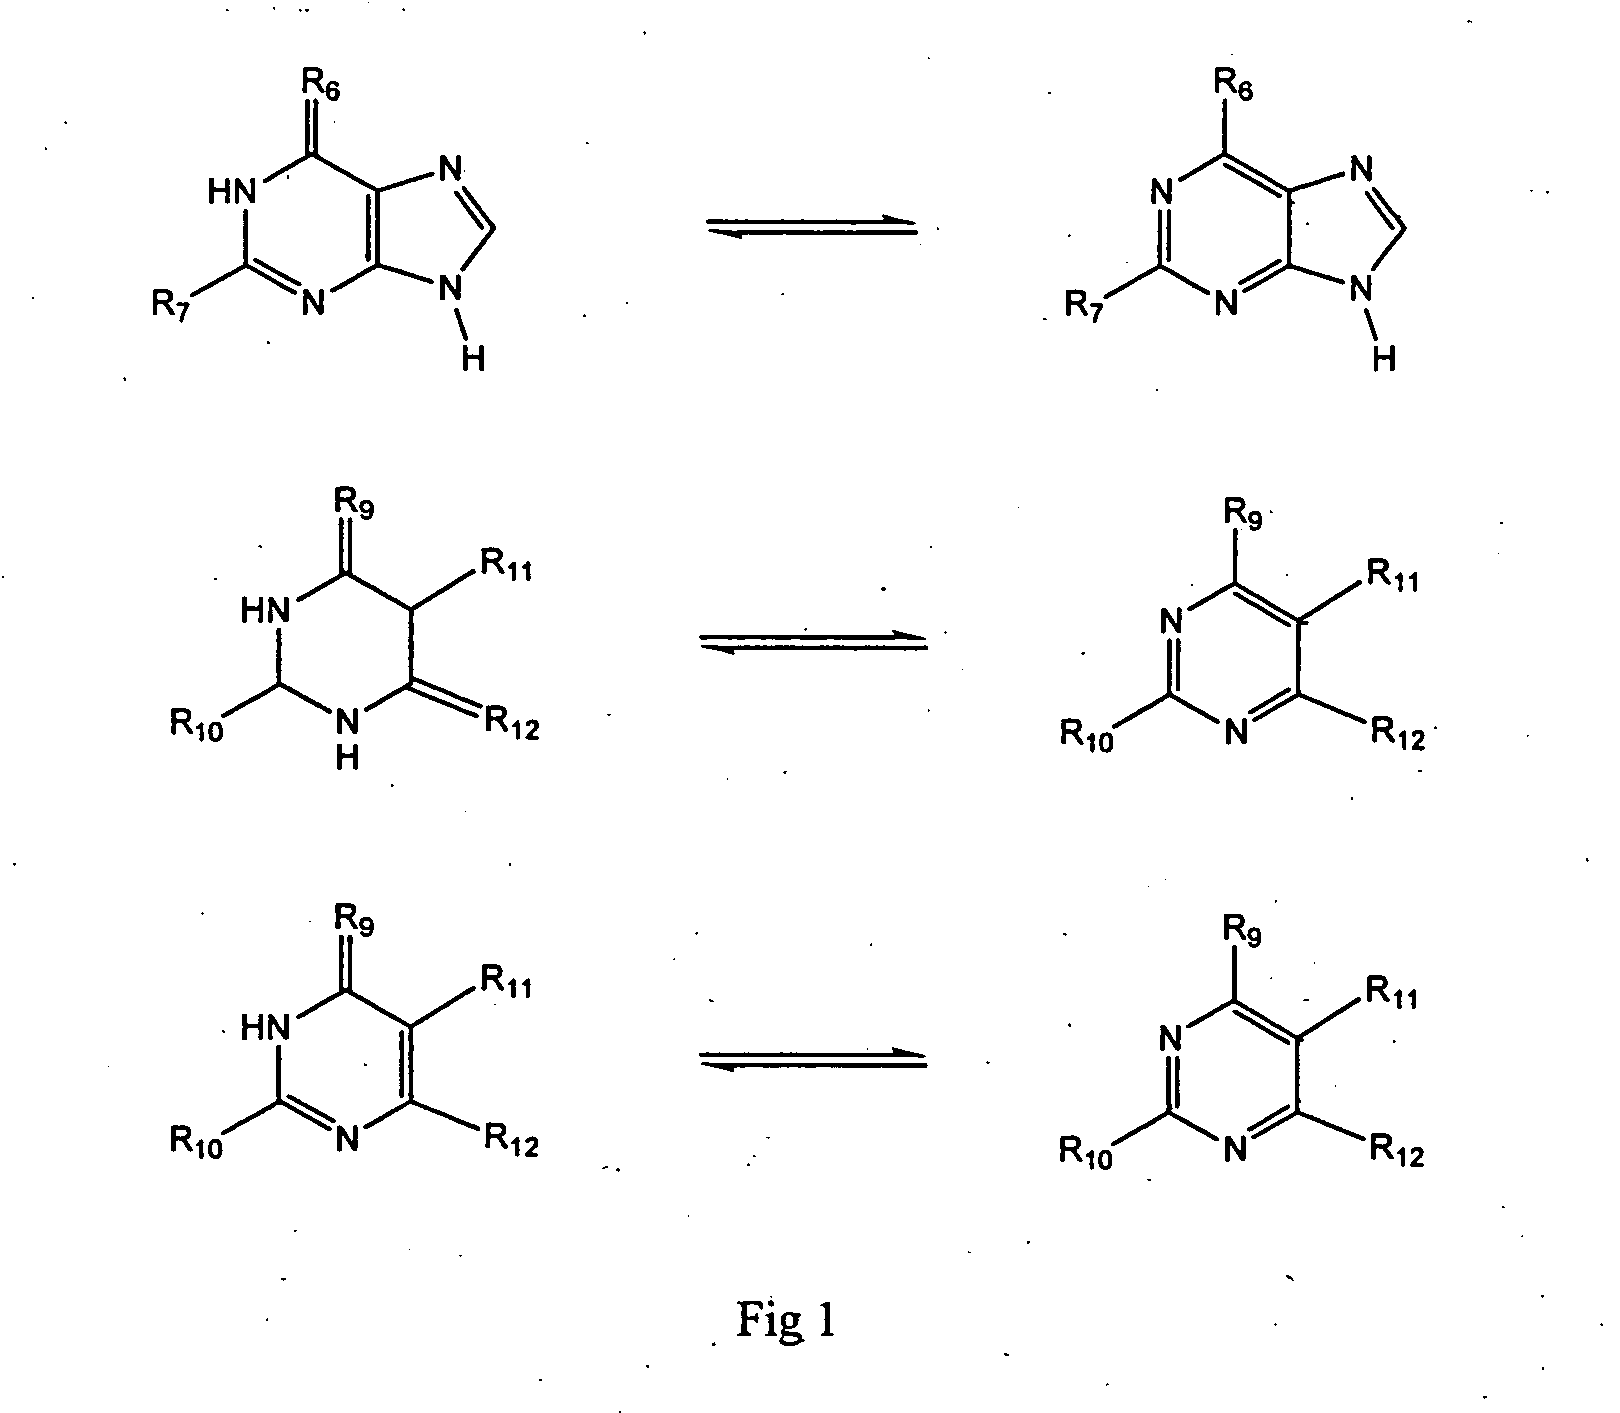 2-Aminopurine analogs having HSP90-inhibiting activity